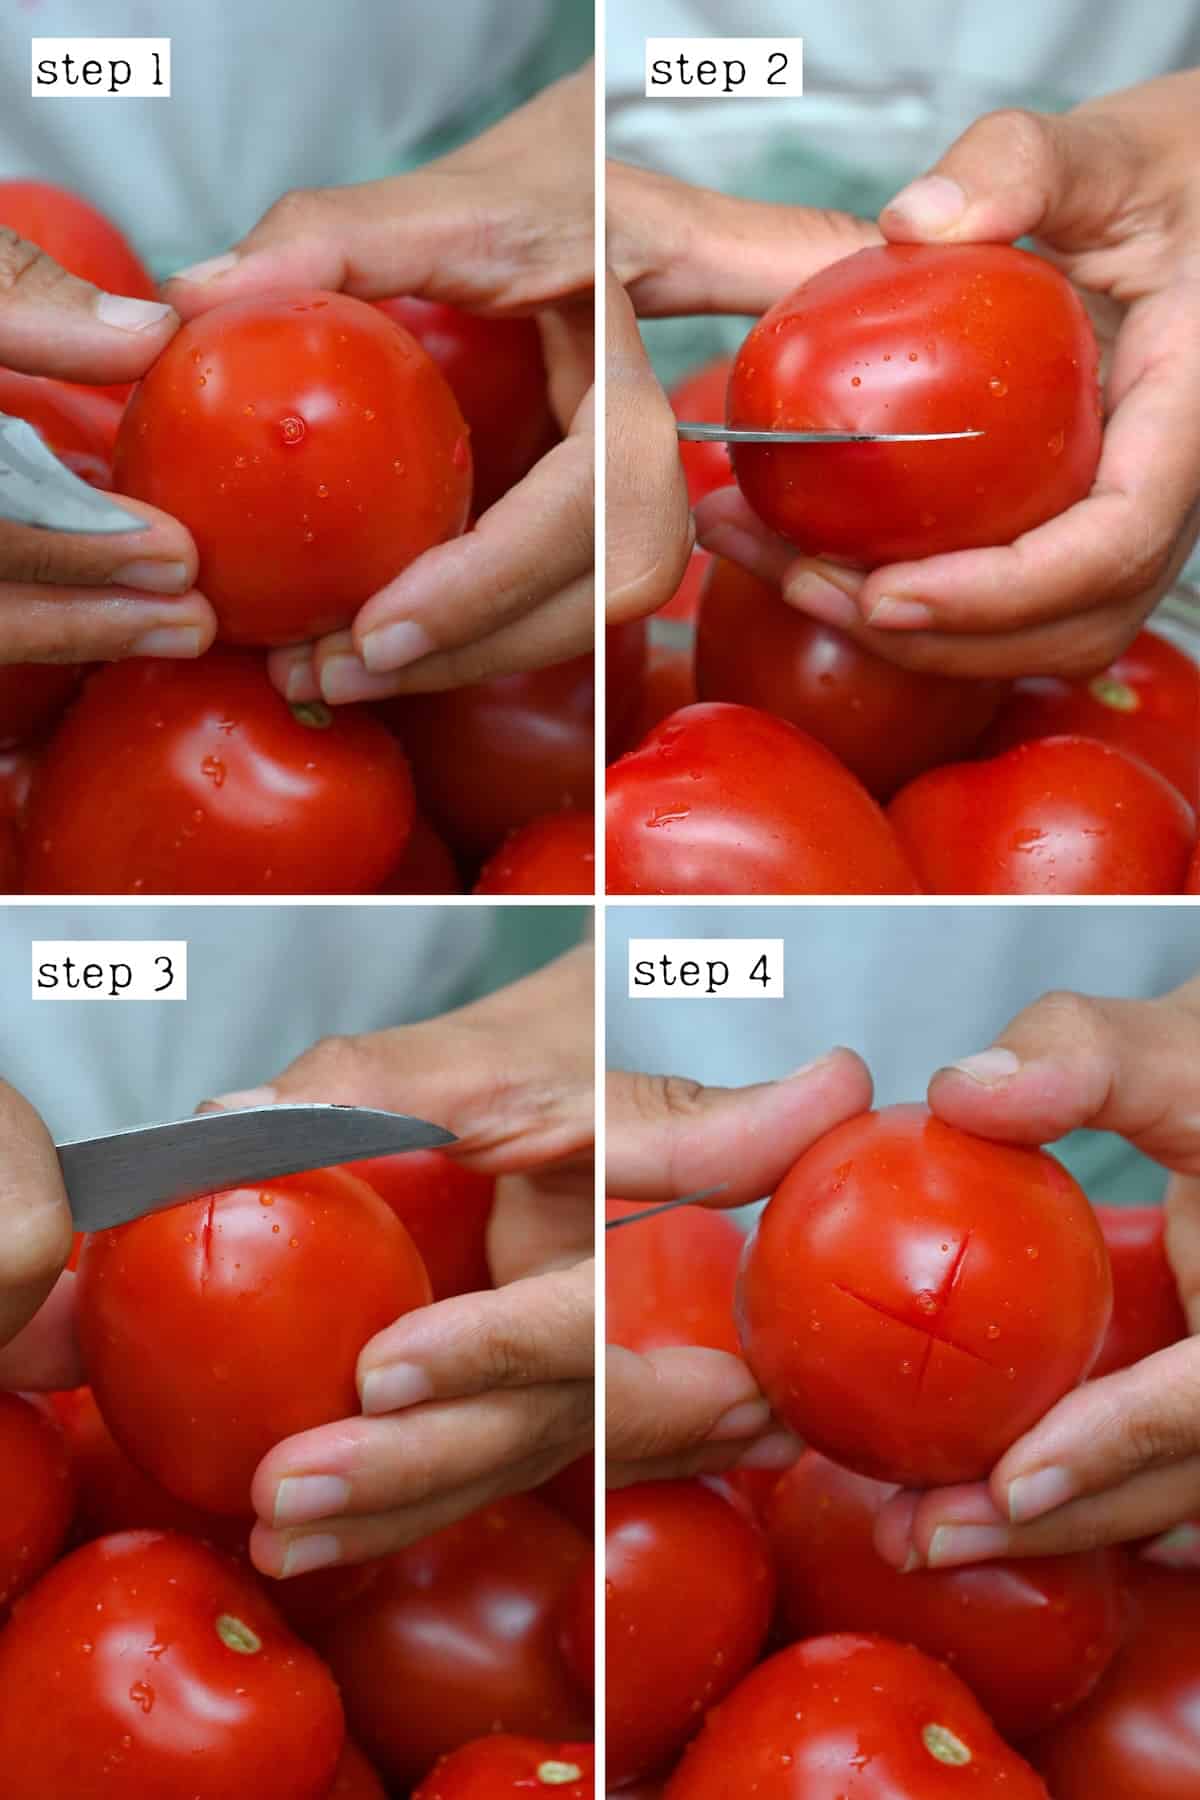 Steps for scoring tomatoes